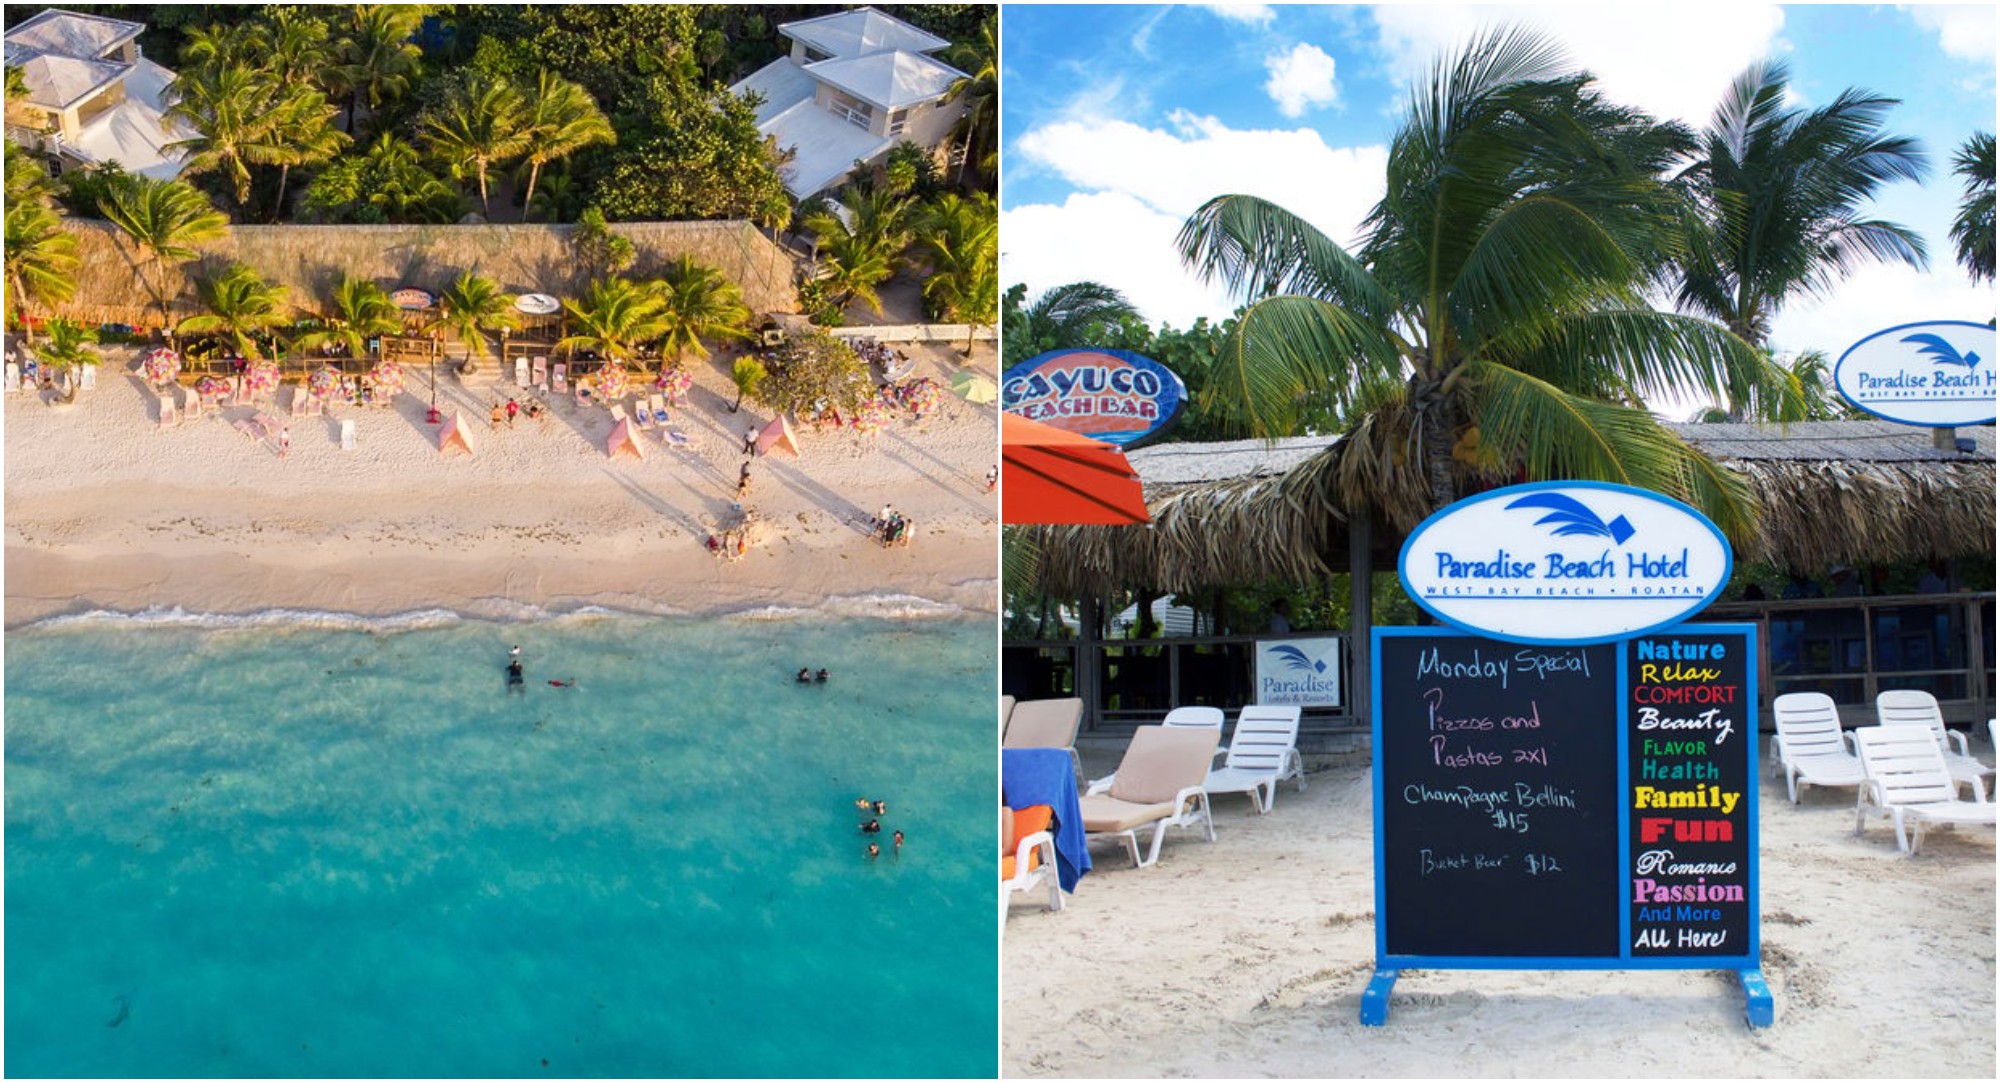 Paradise Beach Hotel recibió el Premio Traveler’s Choice en Trip Advisor